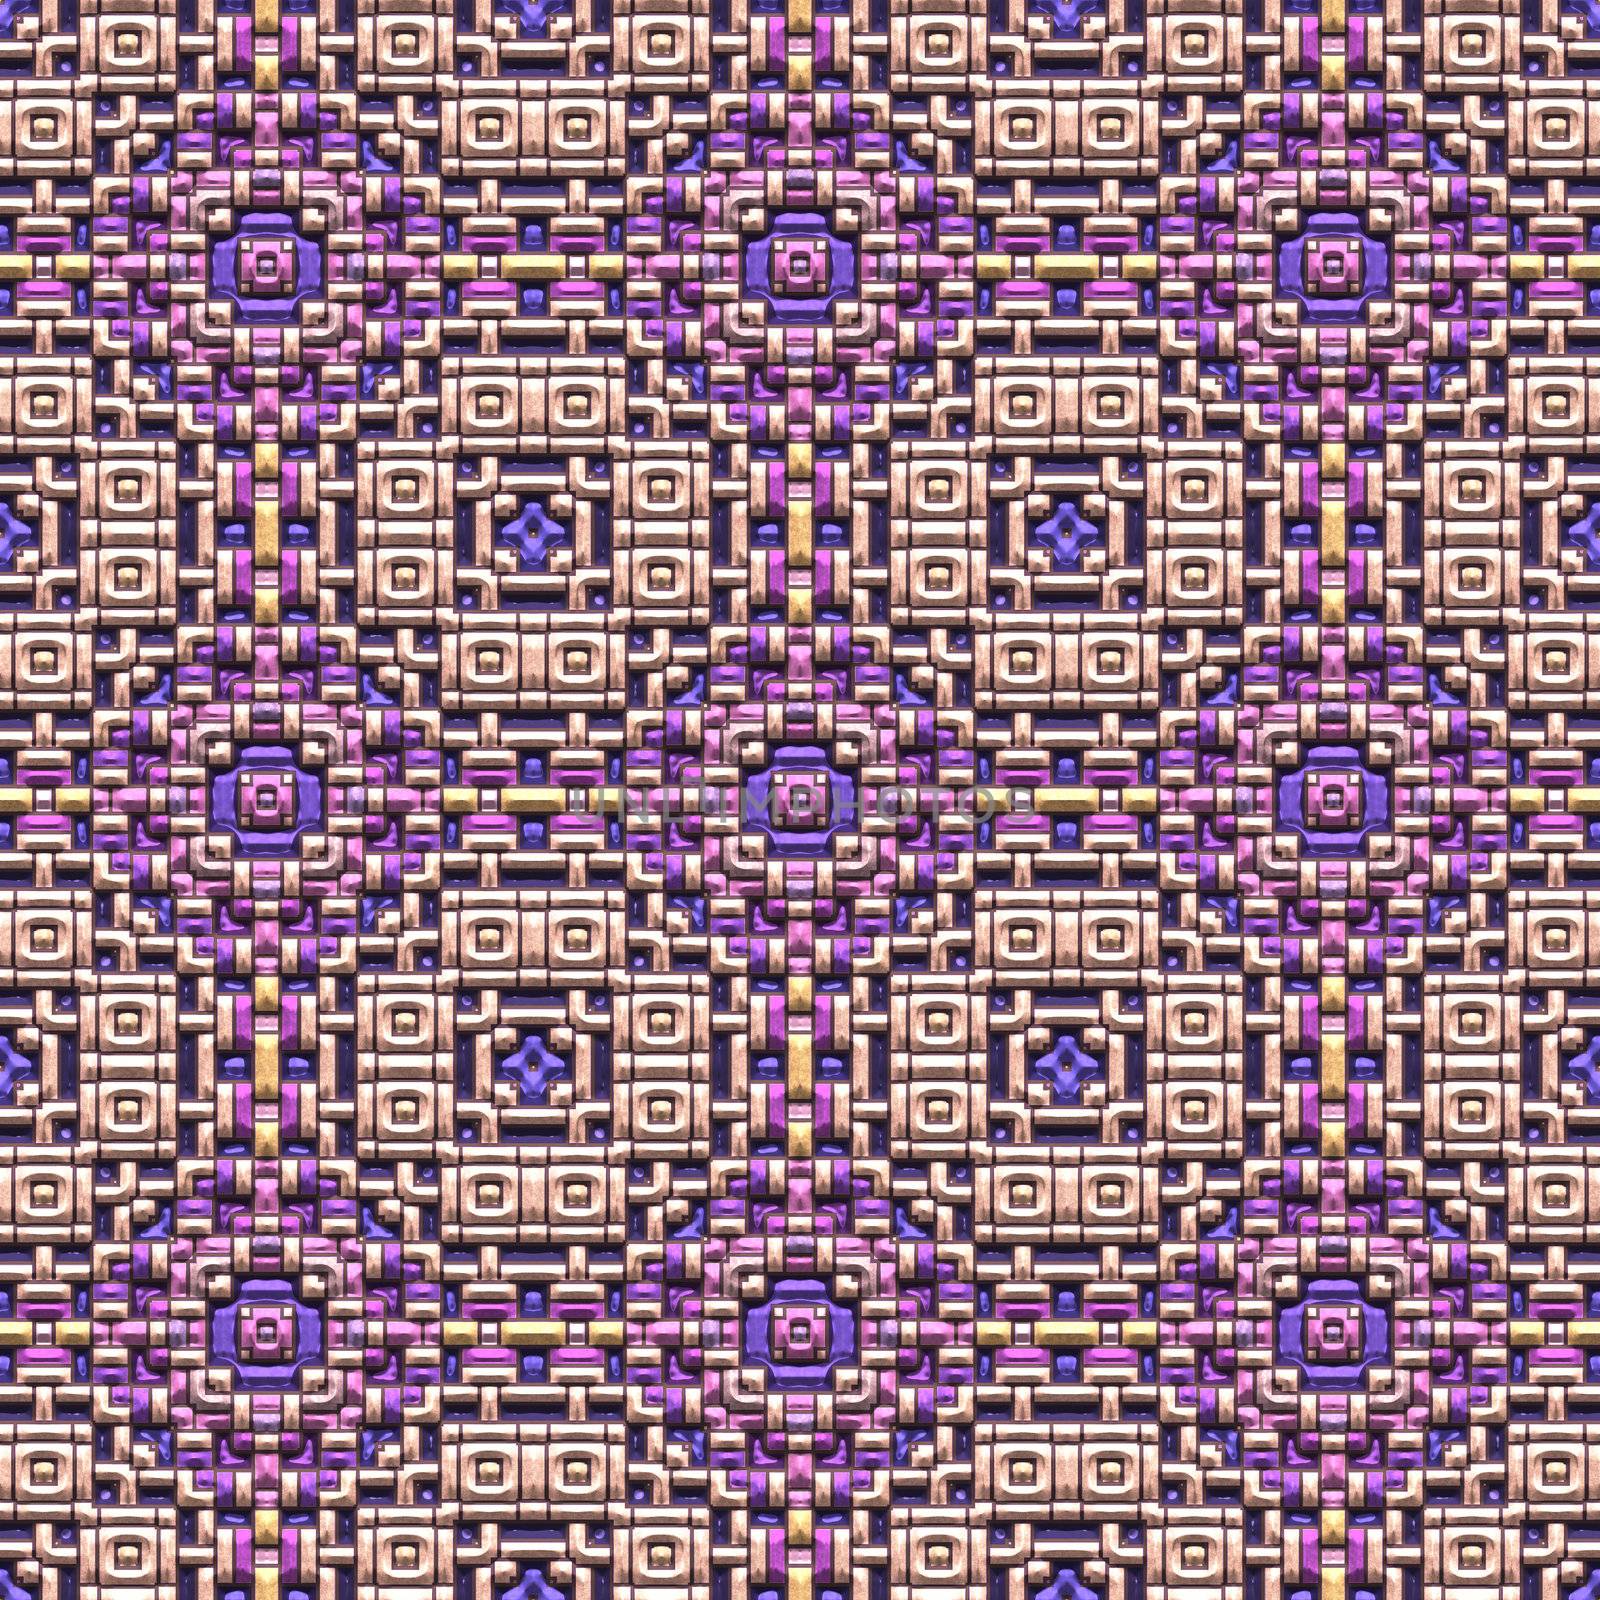 Intricate tile patterns by Nanisimova